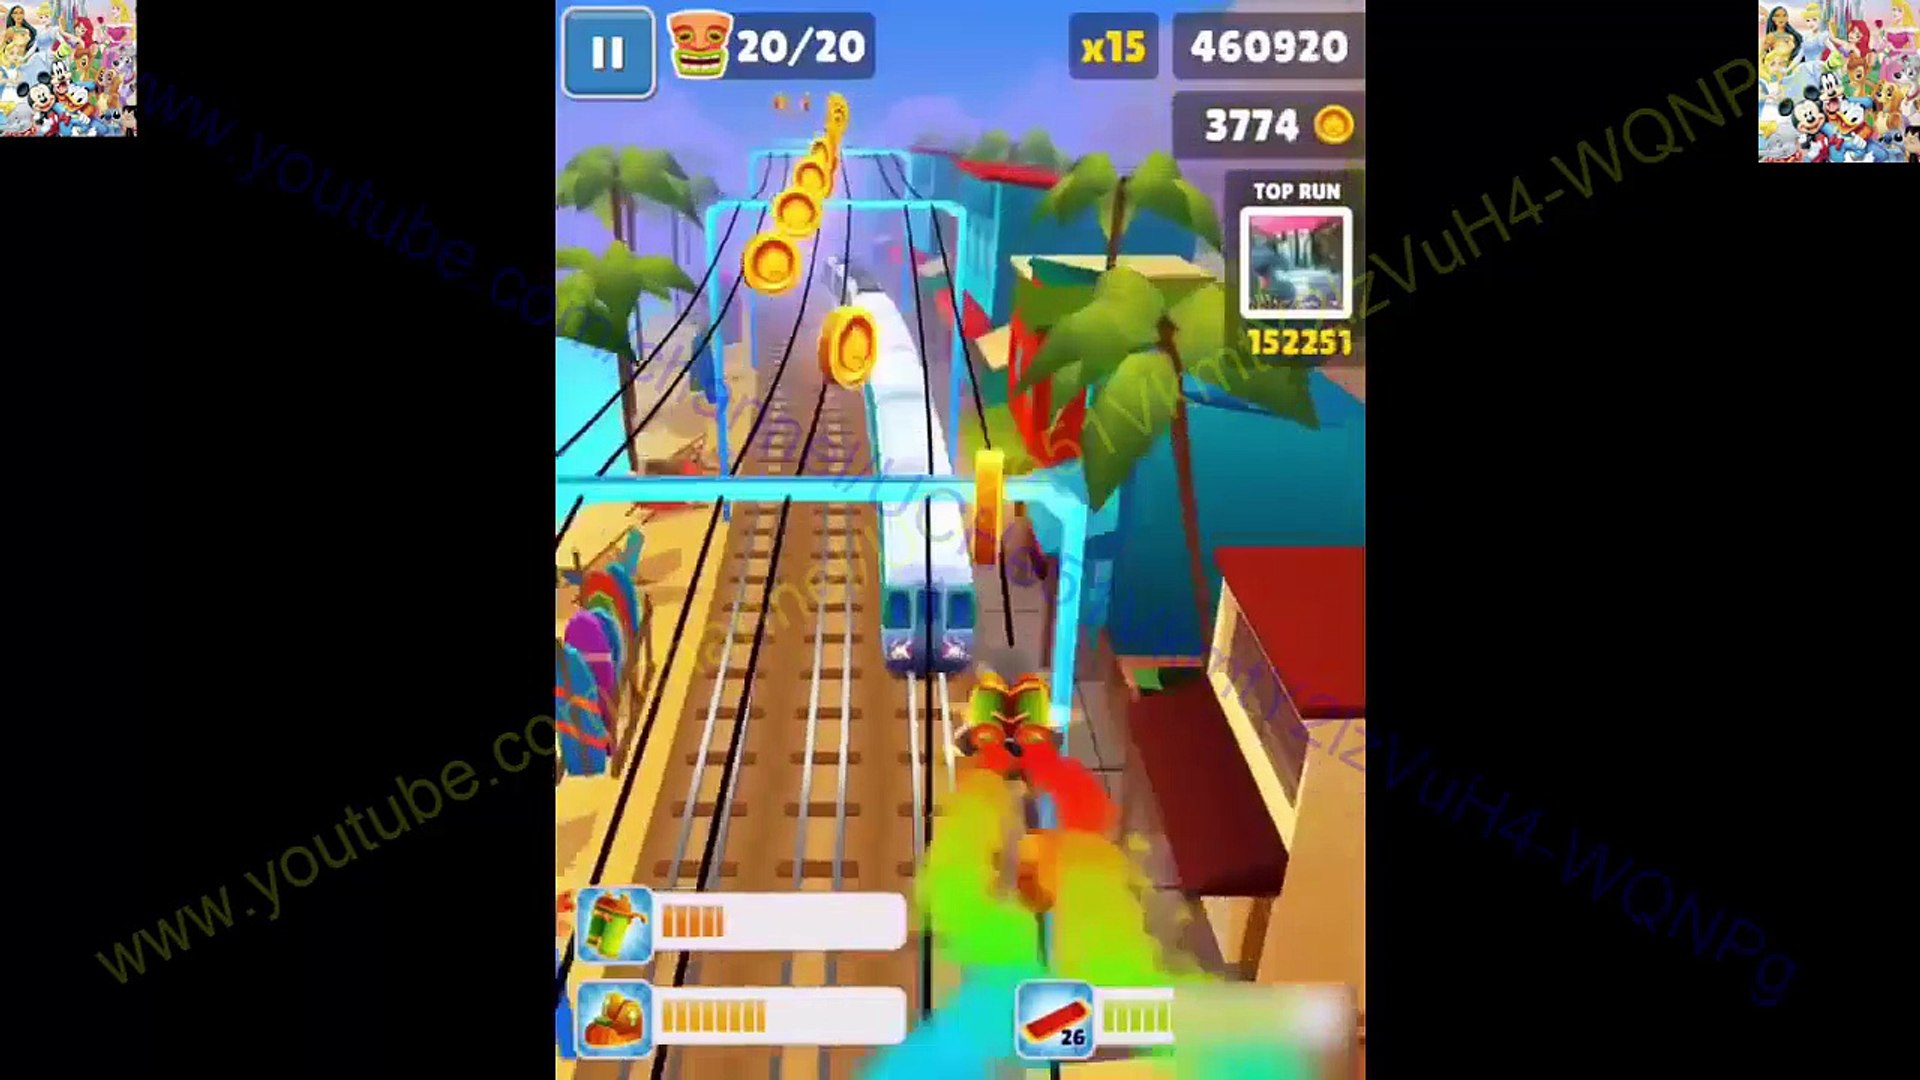 Subway Surfer HighScore 1399470 اكبر رقم قياسي في لعبة سبوي سيرفير - فيديو  Dailymotion